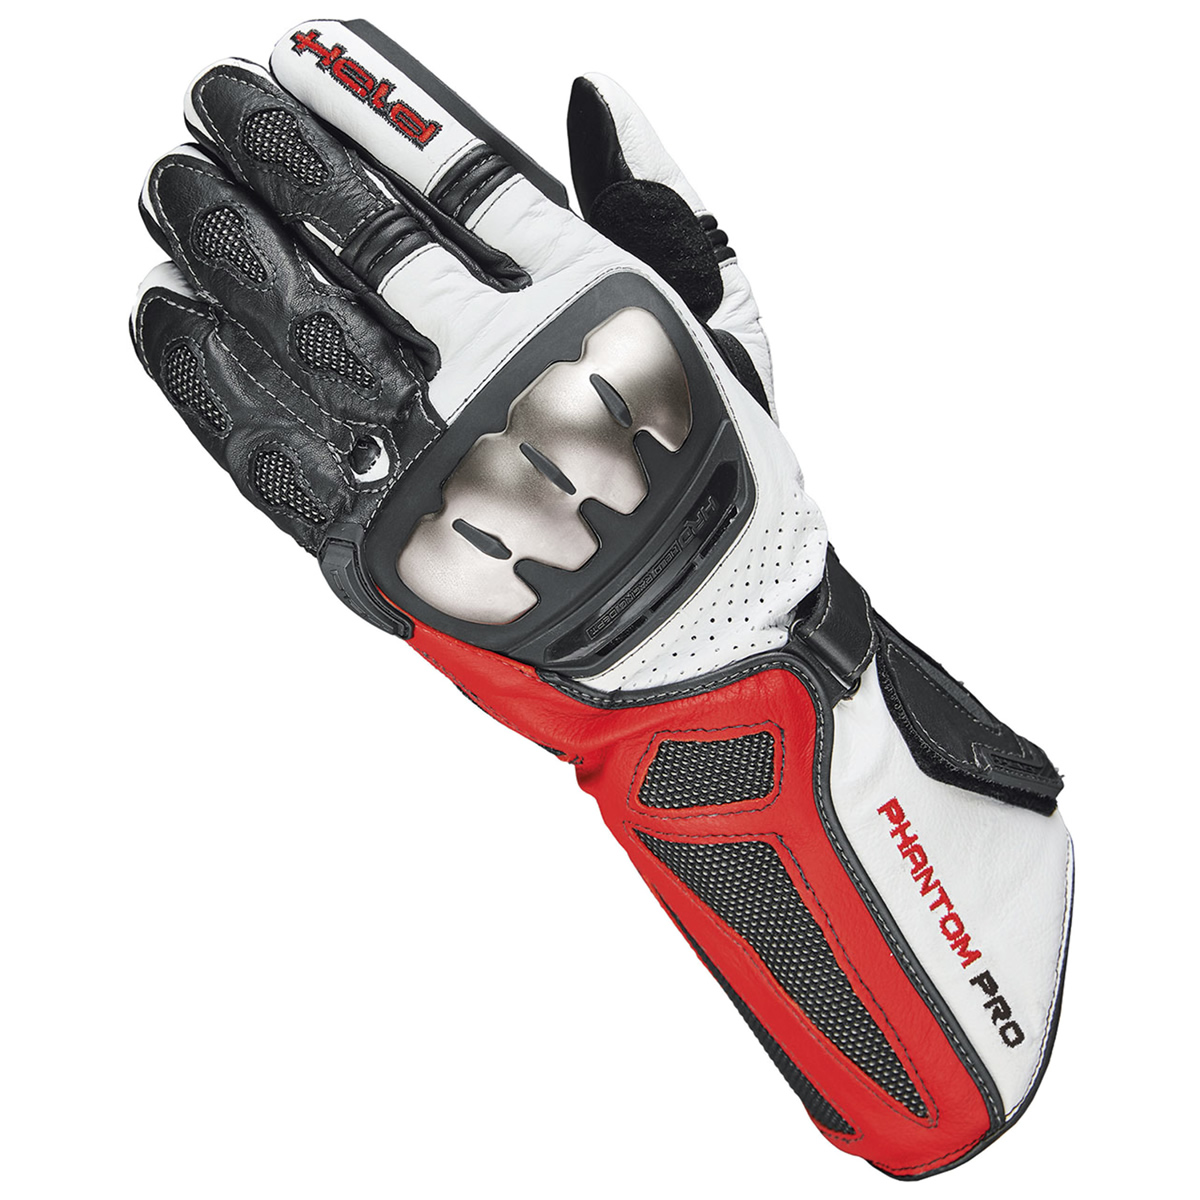 Held Handschuhe Phantom Pro, schwarz-weiß-rot